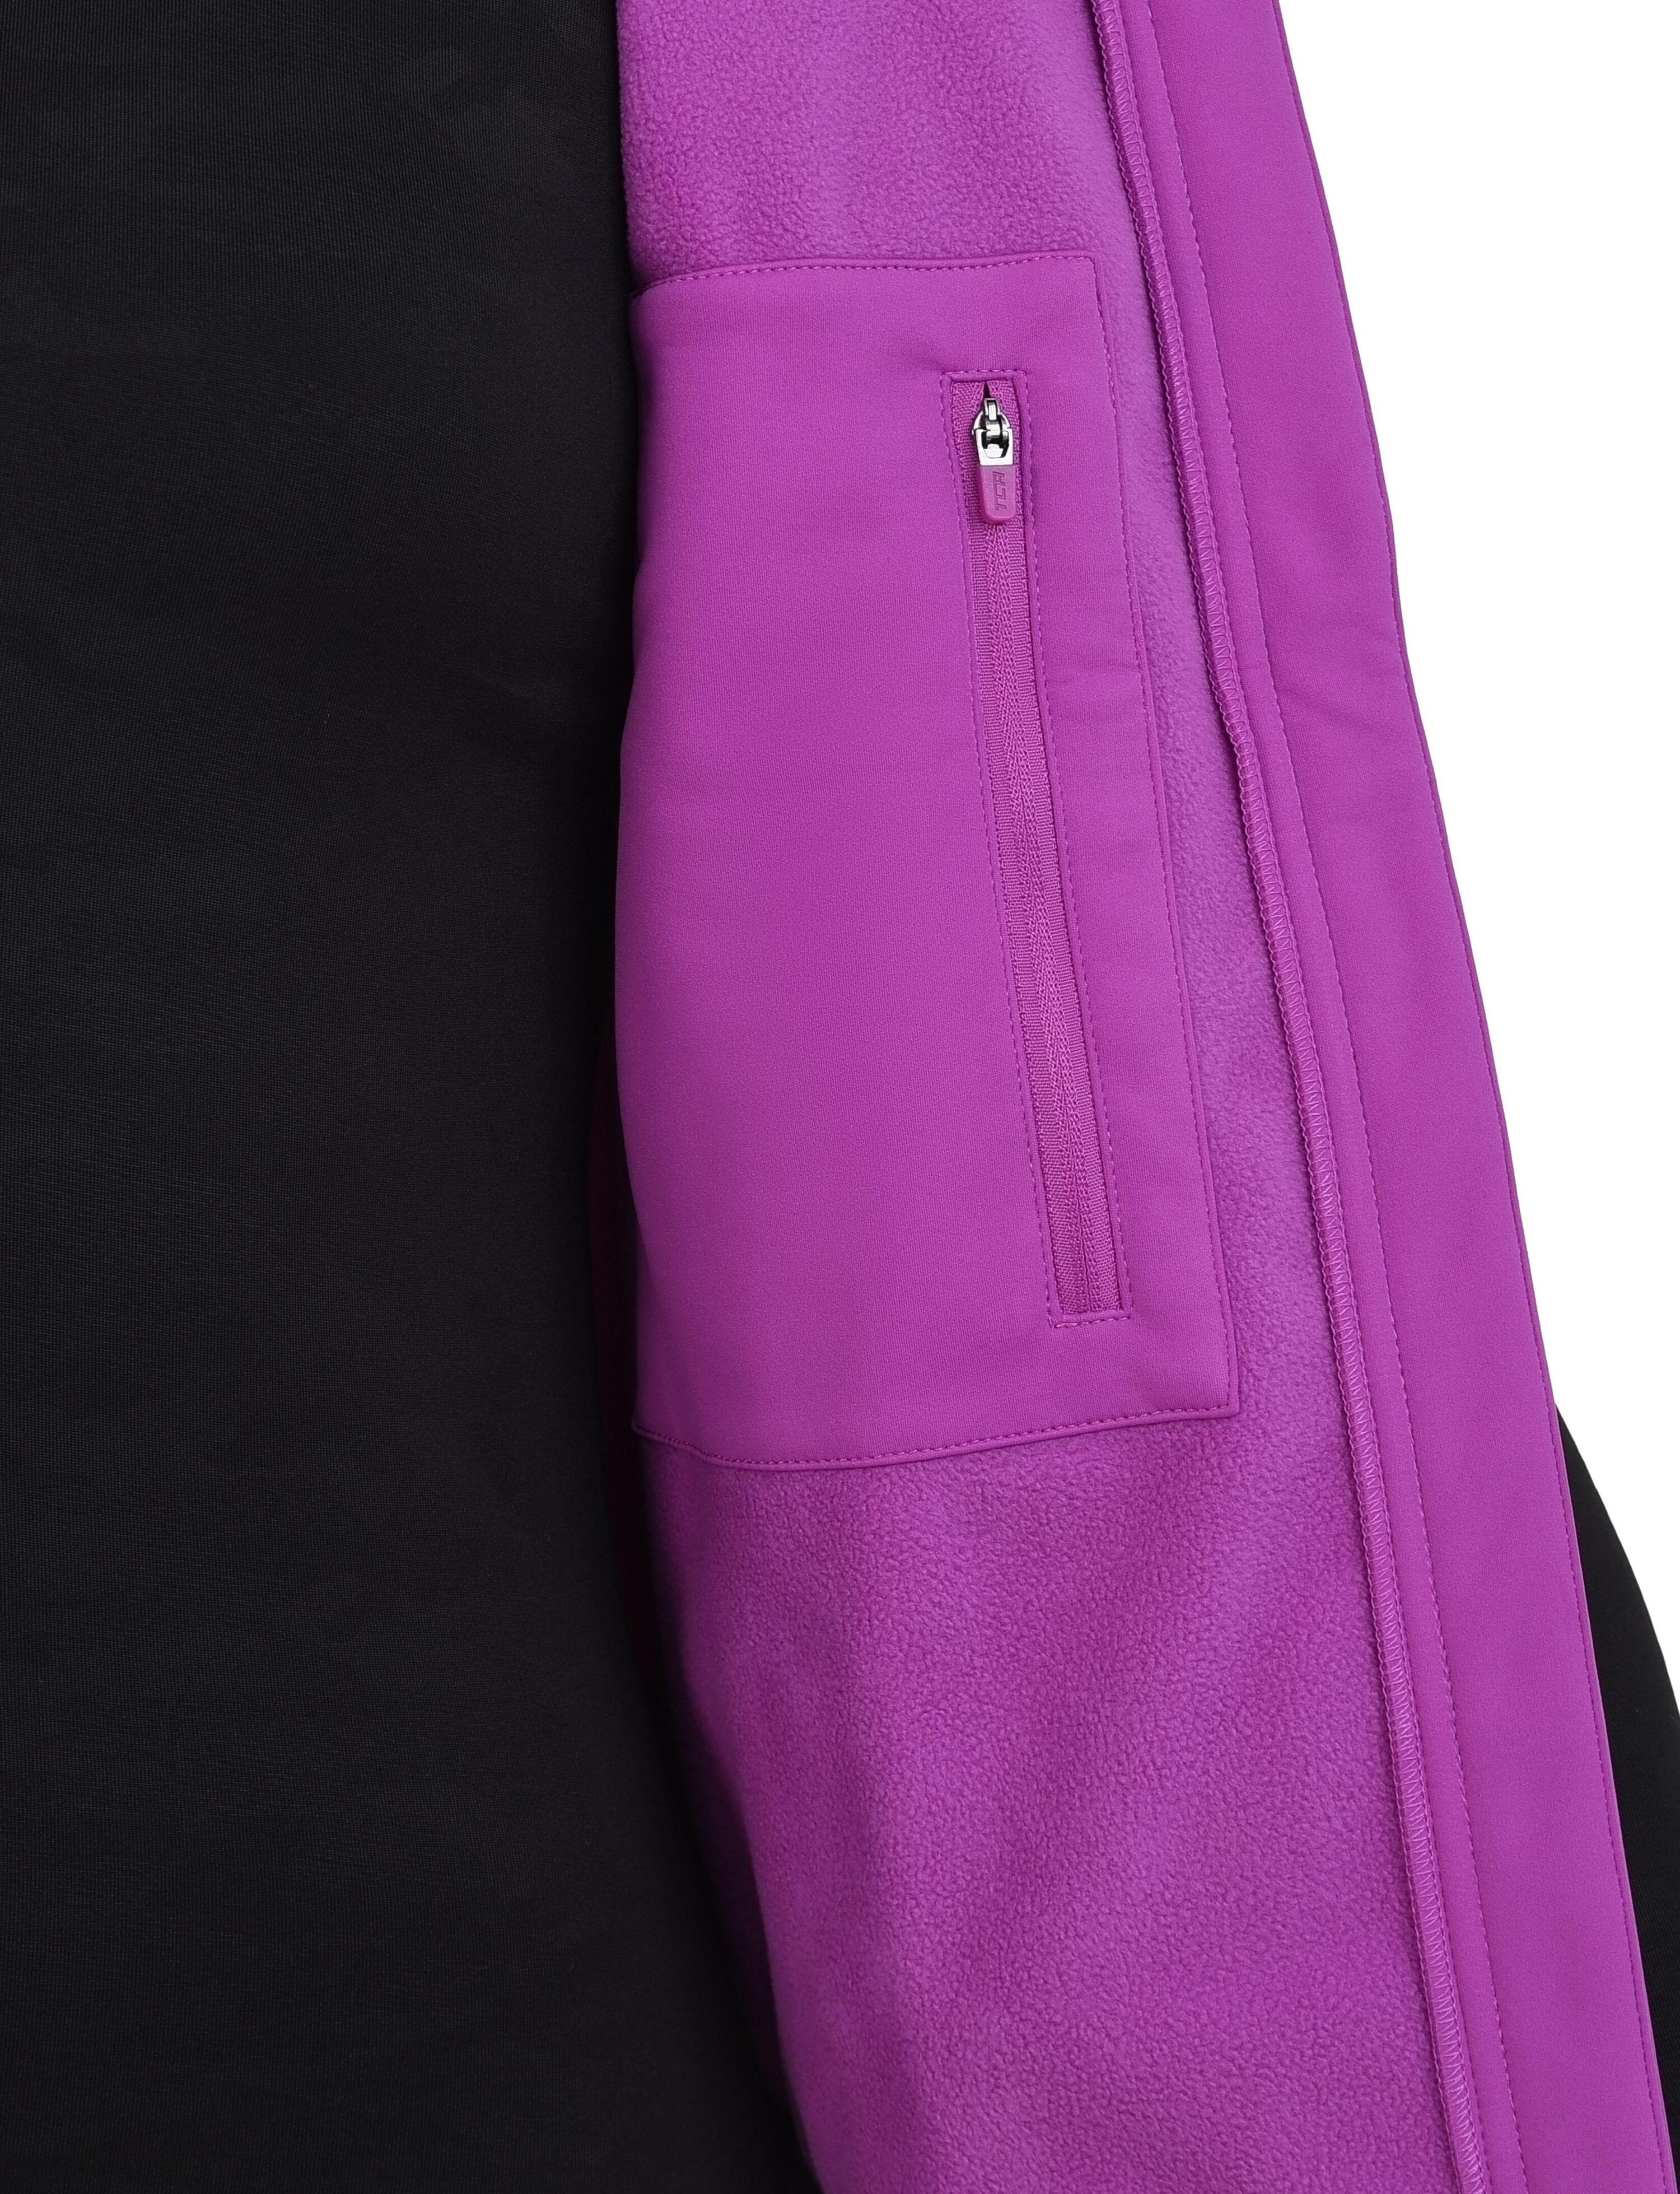 Women's Wind Proof Gilet with Zip Pockets - Neon Fuchsia 5/5